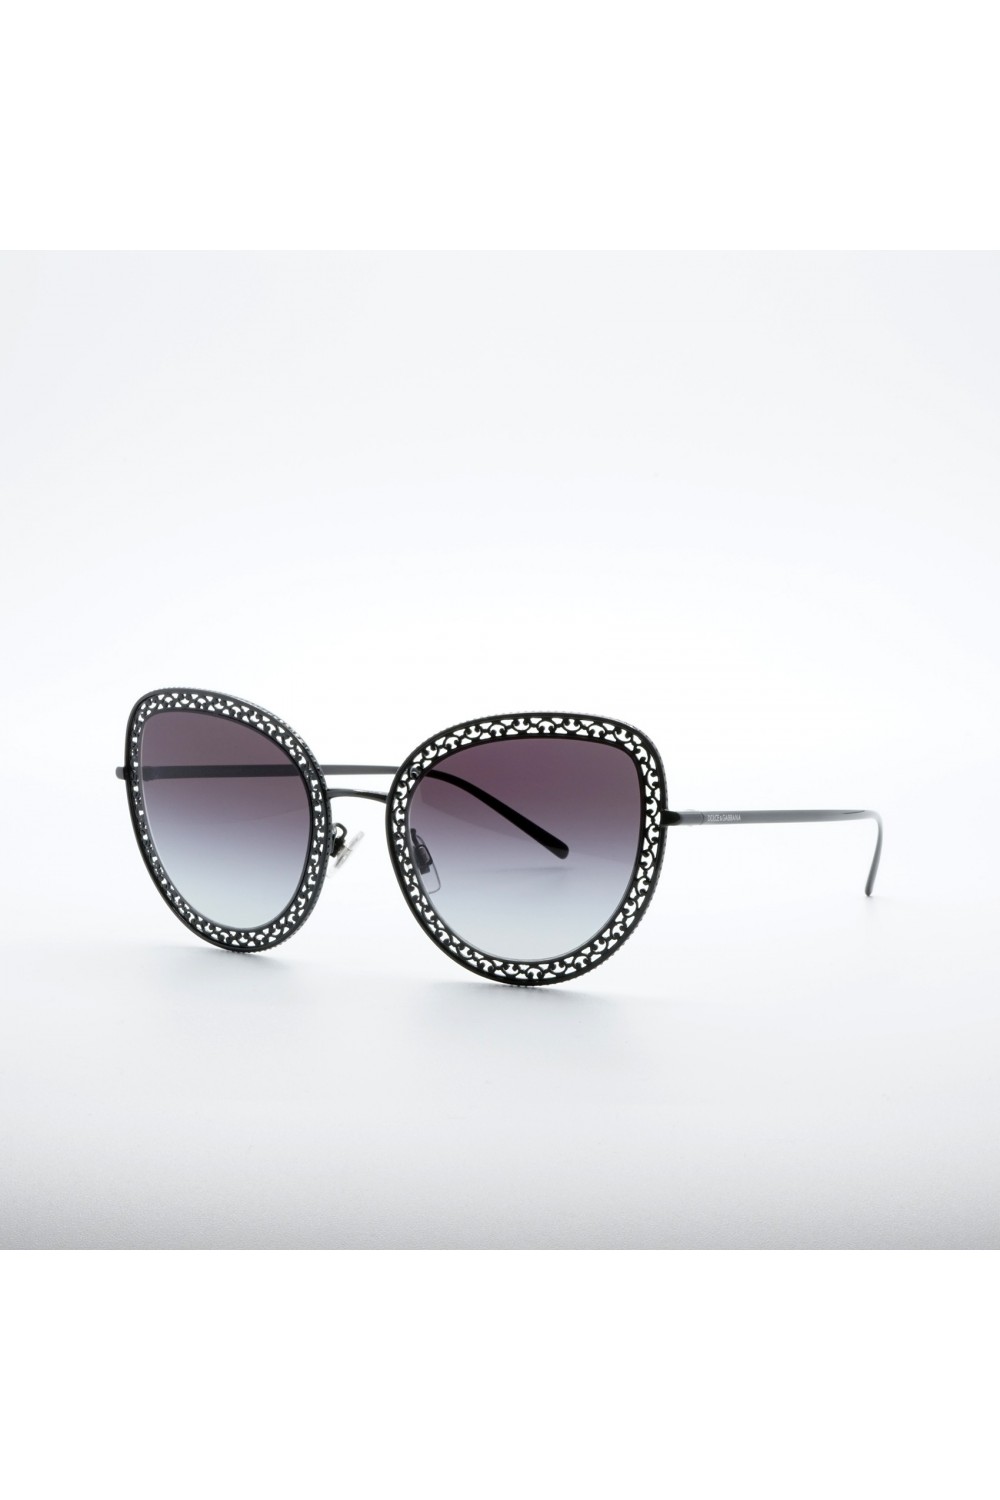 Dolce&Gabbana - Occhiali da sole in metallo cat eye per donna nero - DG2226